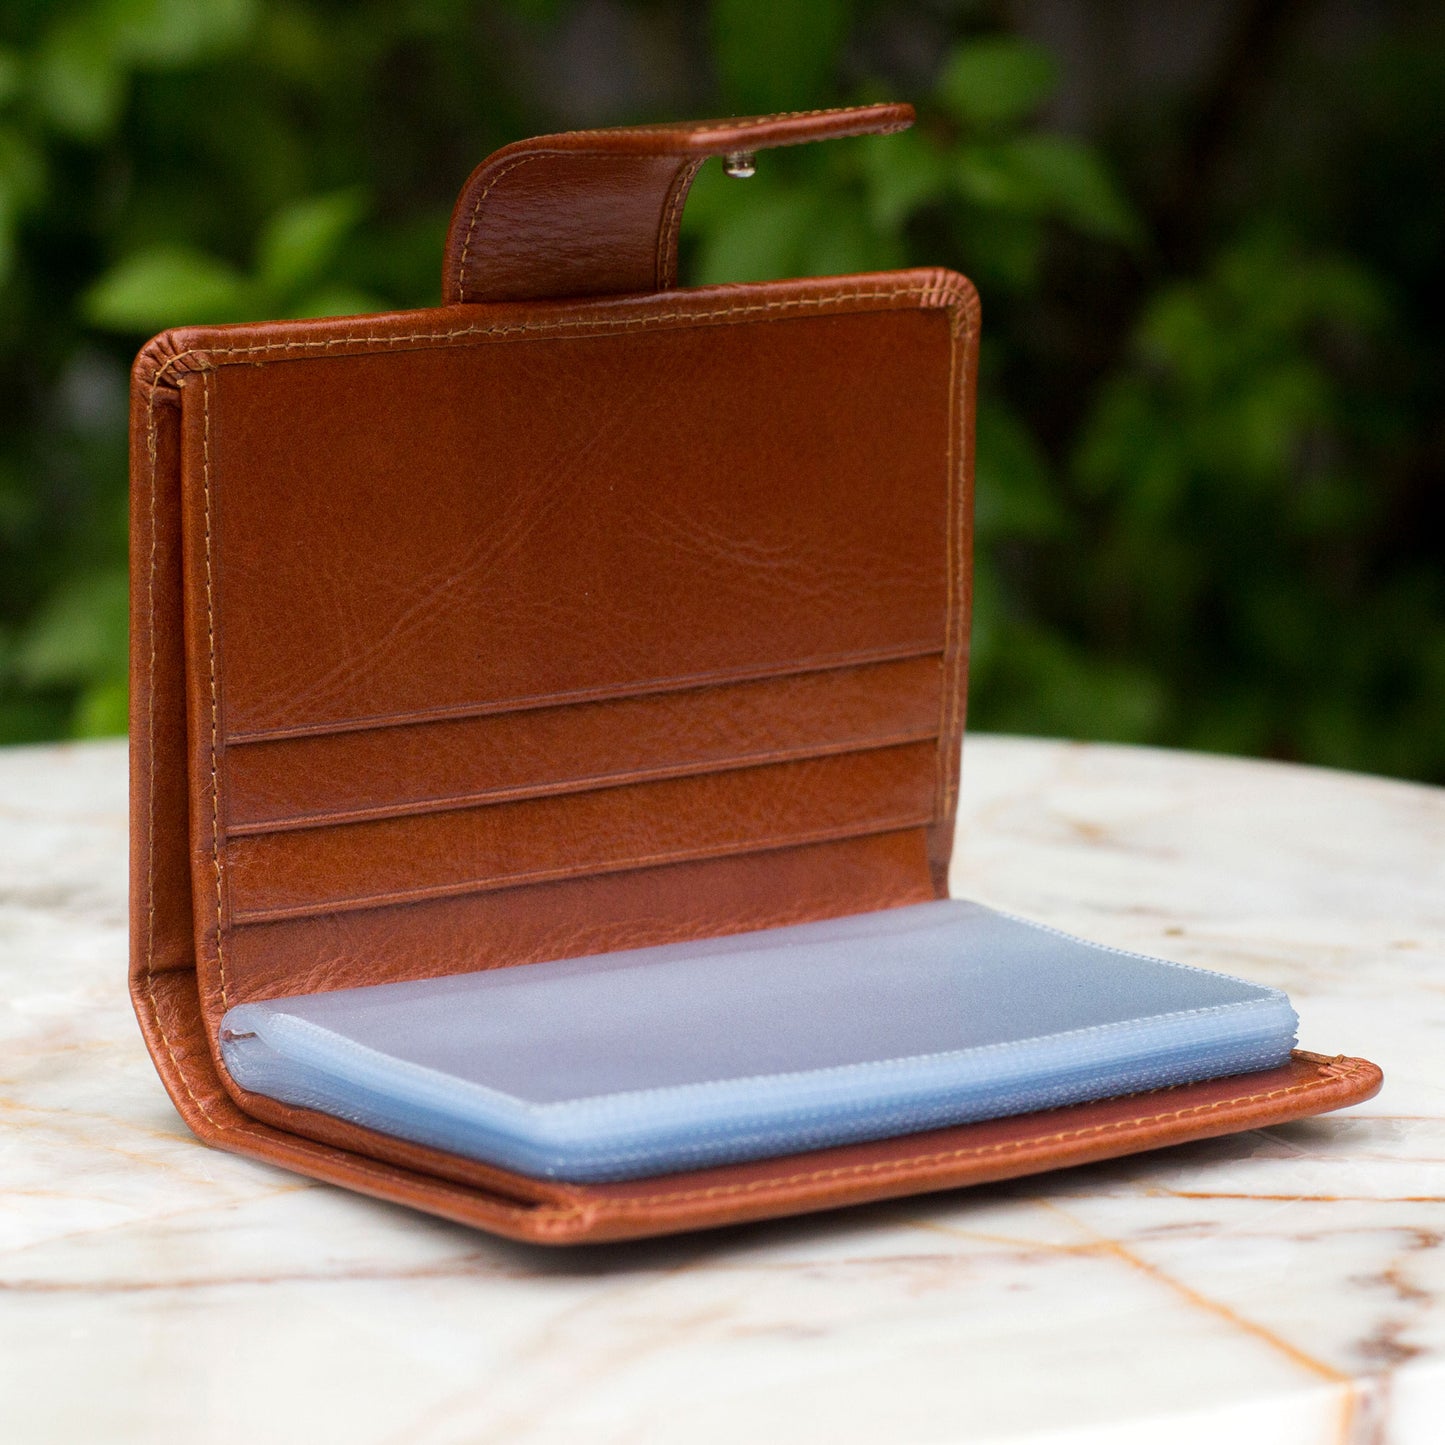 Infinite Brown Leather wallet